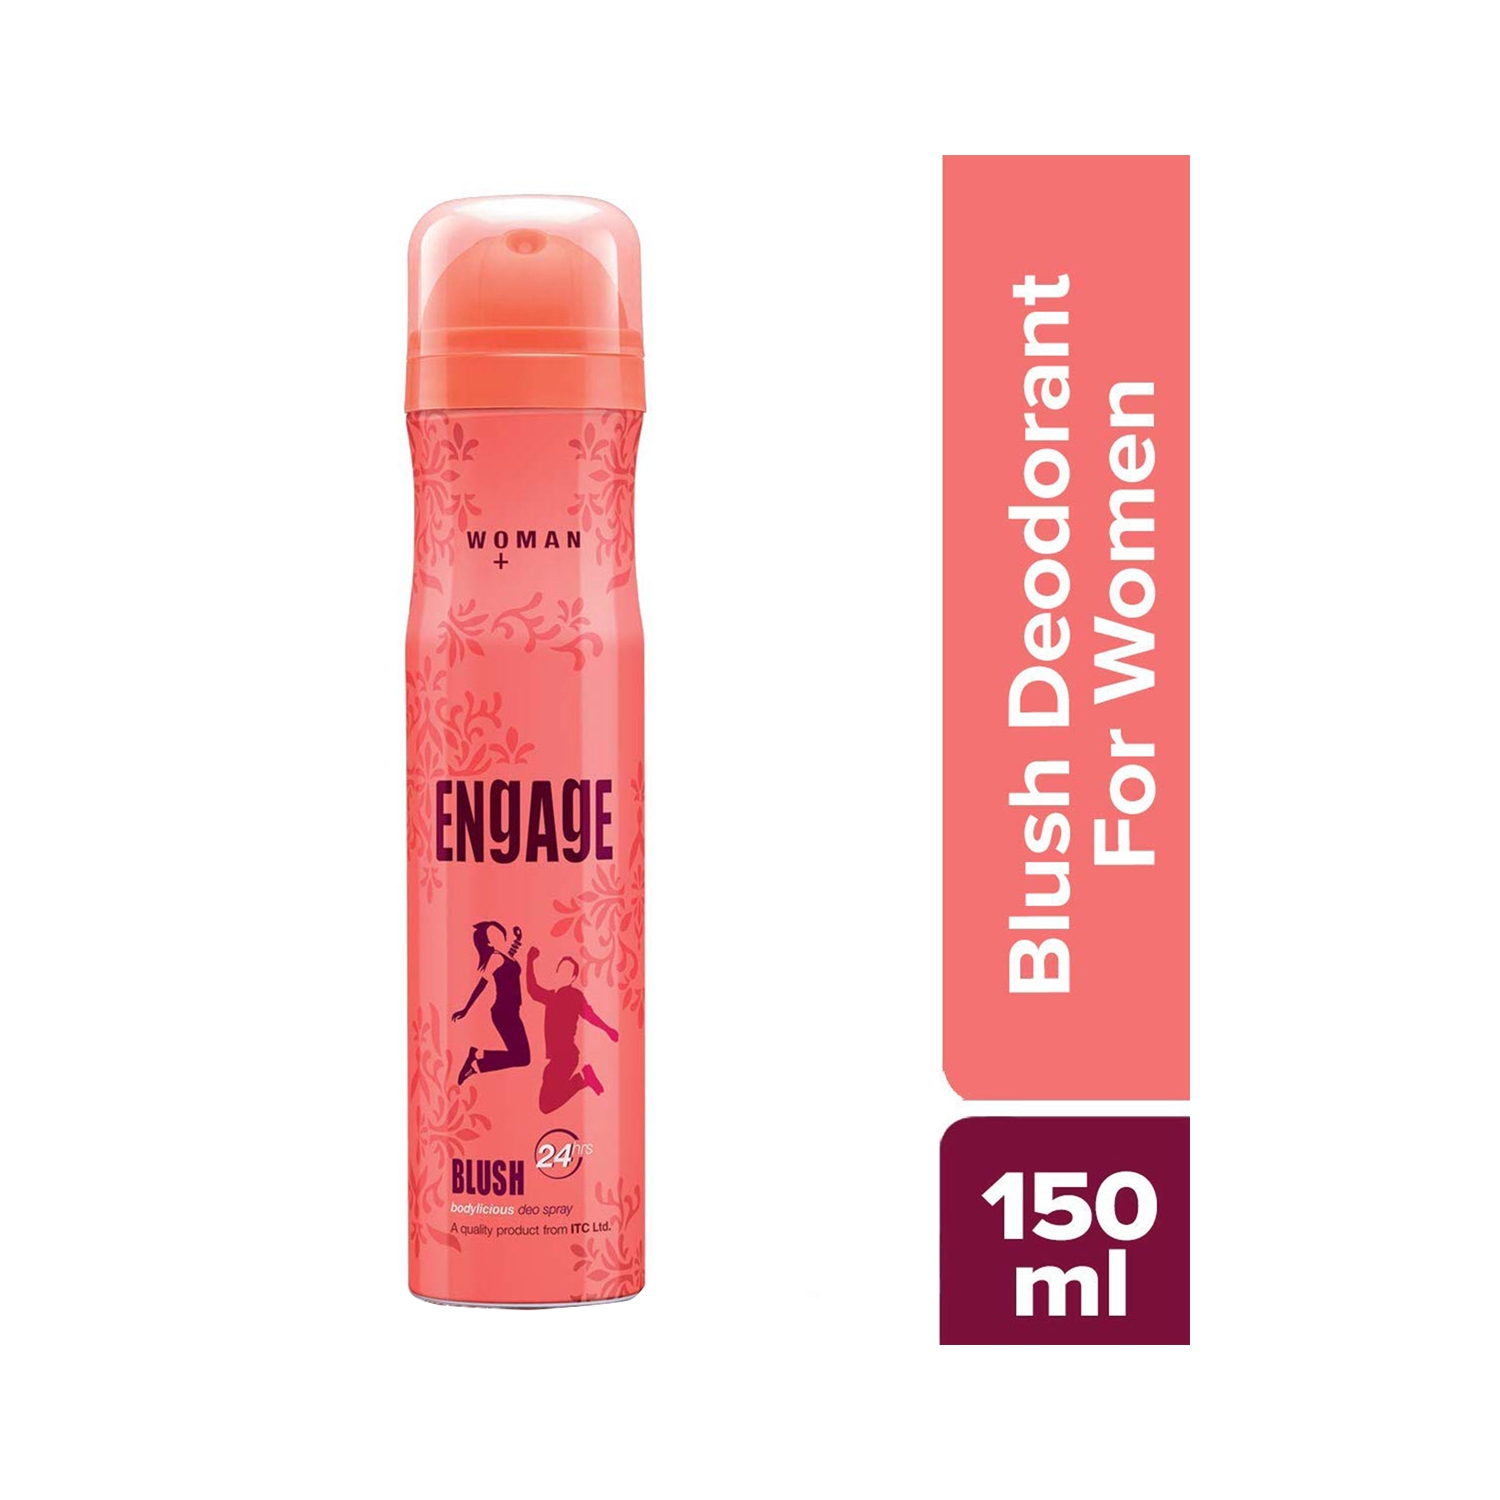 Engage | Engage Blush Deodorant Spray For Women (150ml)